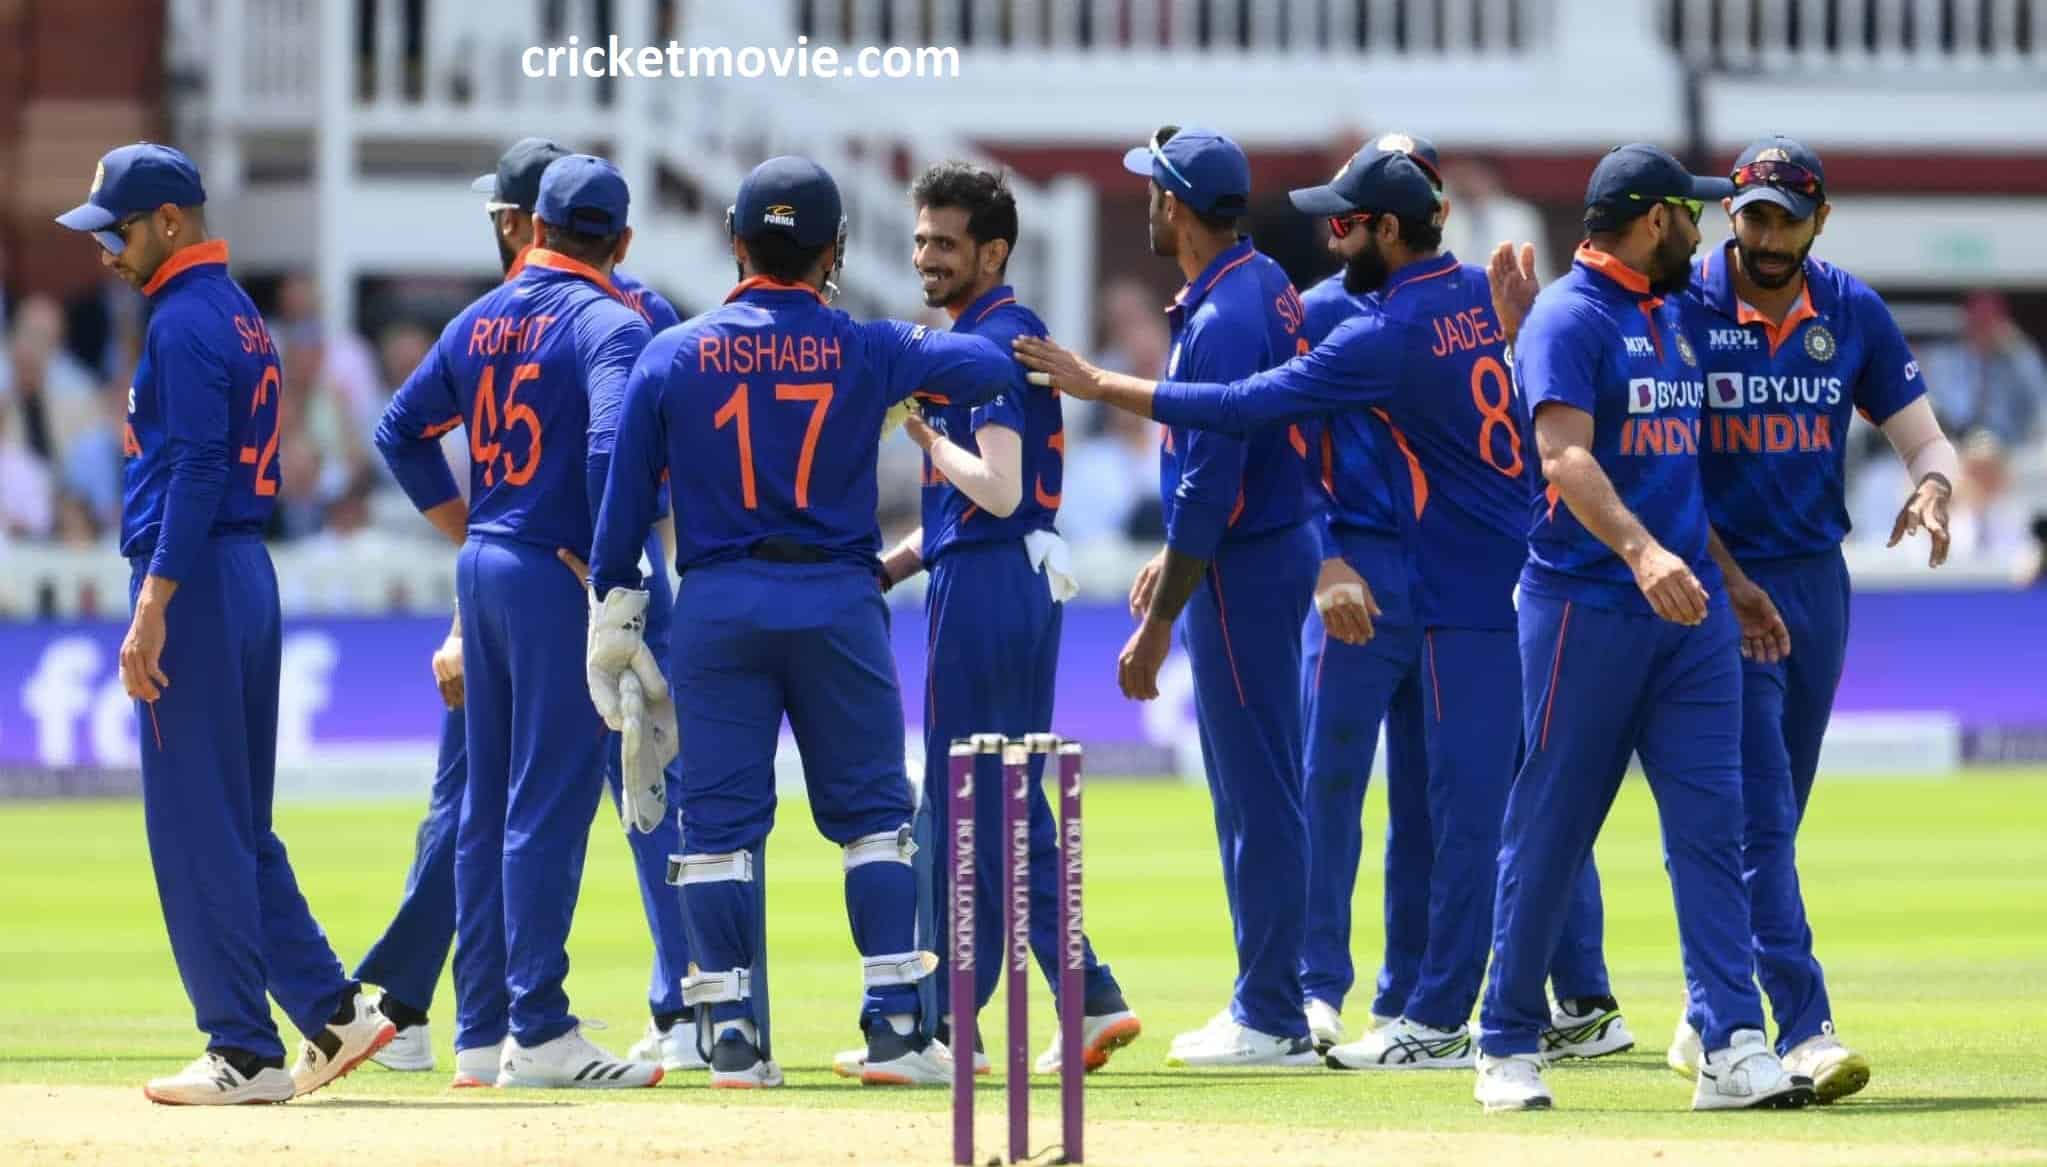 England beat Team India by 100 runs in 2nd ODI-cricketmovie.com